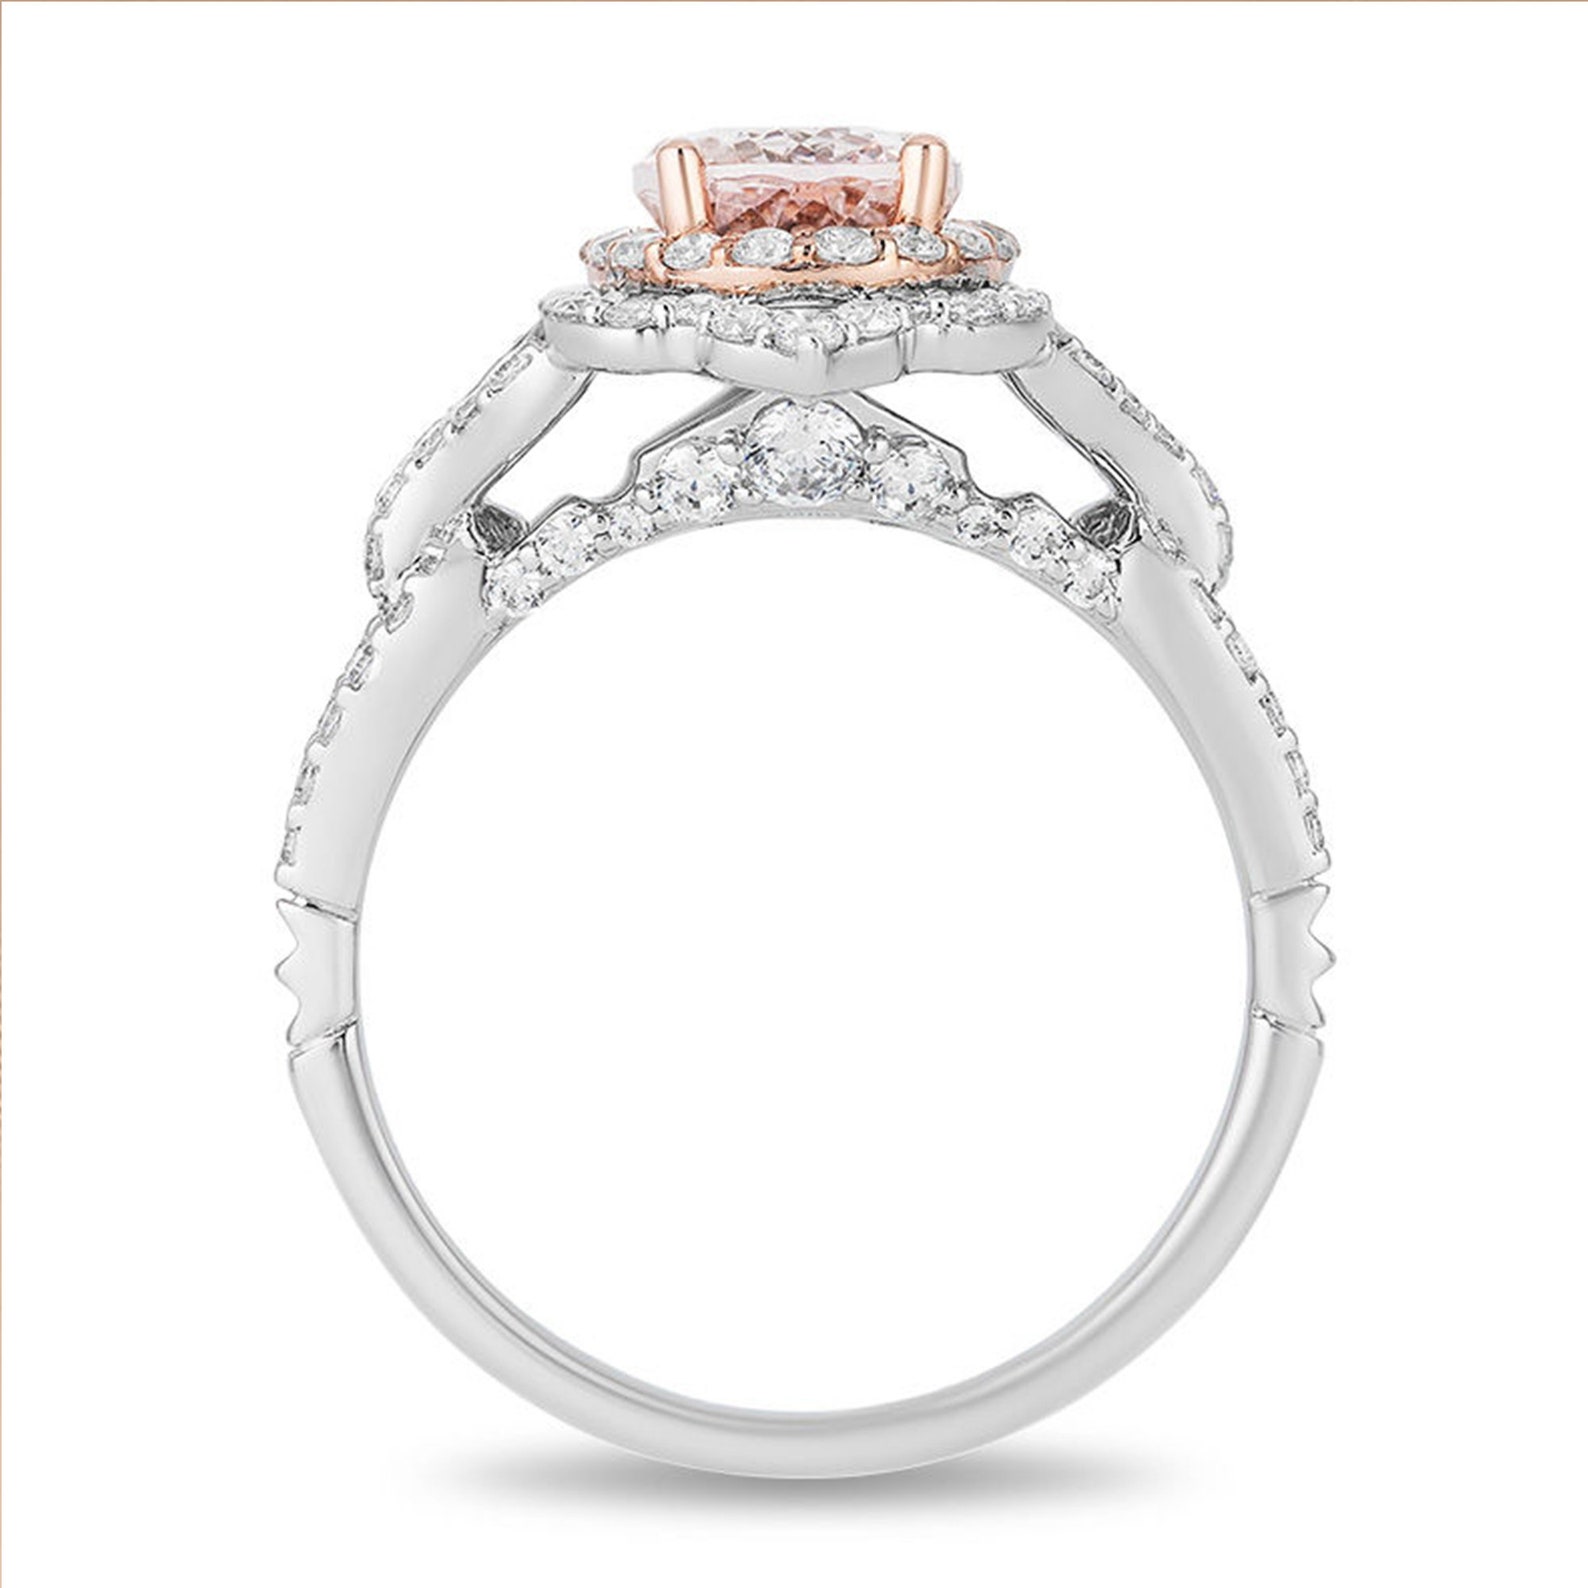 Enchanted Disney Aurora Ring Pink Oval Cut Simulated Diamond - Etsy